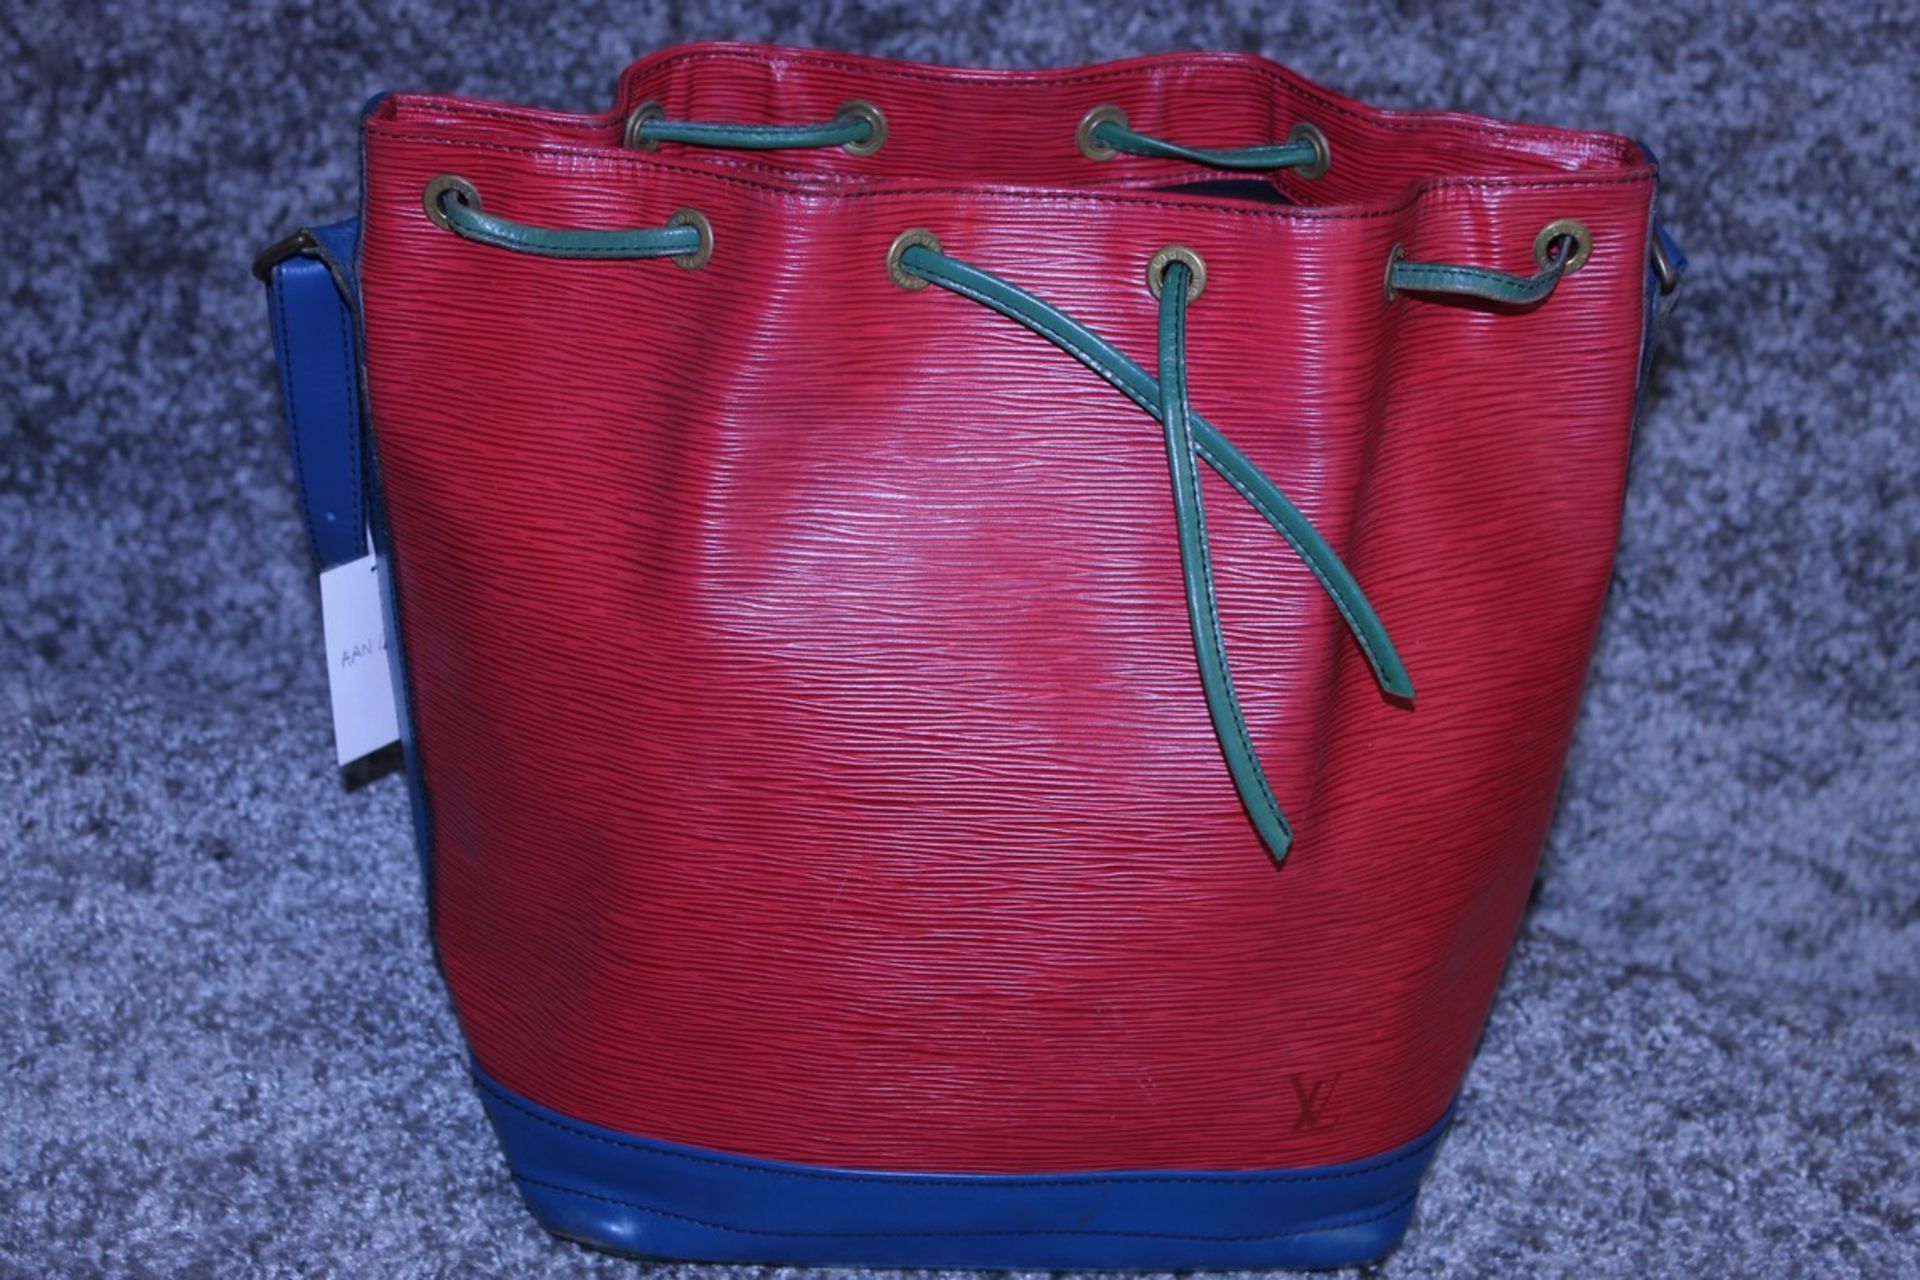 Rrp £1,200 Noe Tricolor Shoulder Bag, Red/Blue/Green Epi Claf Leather With Black Stitching - Image 2 of 4